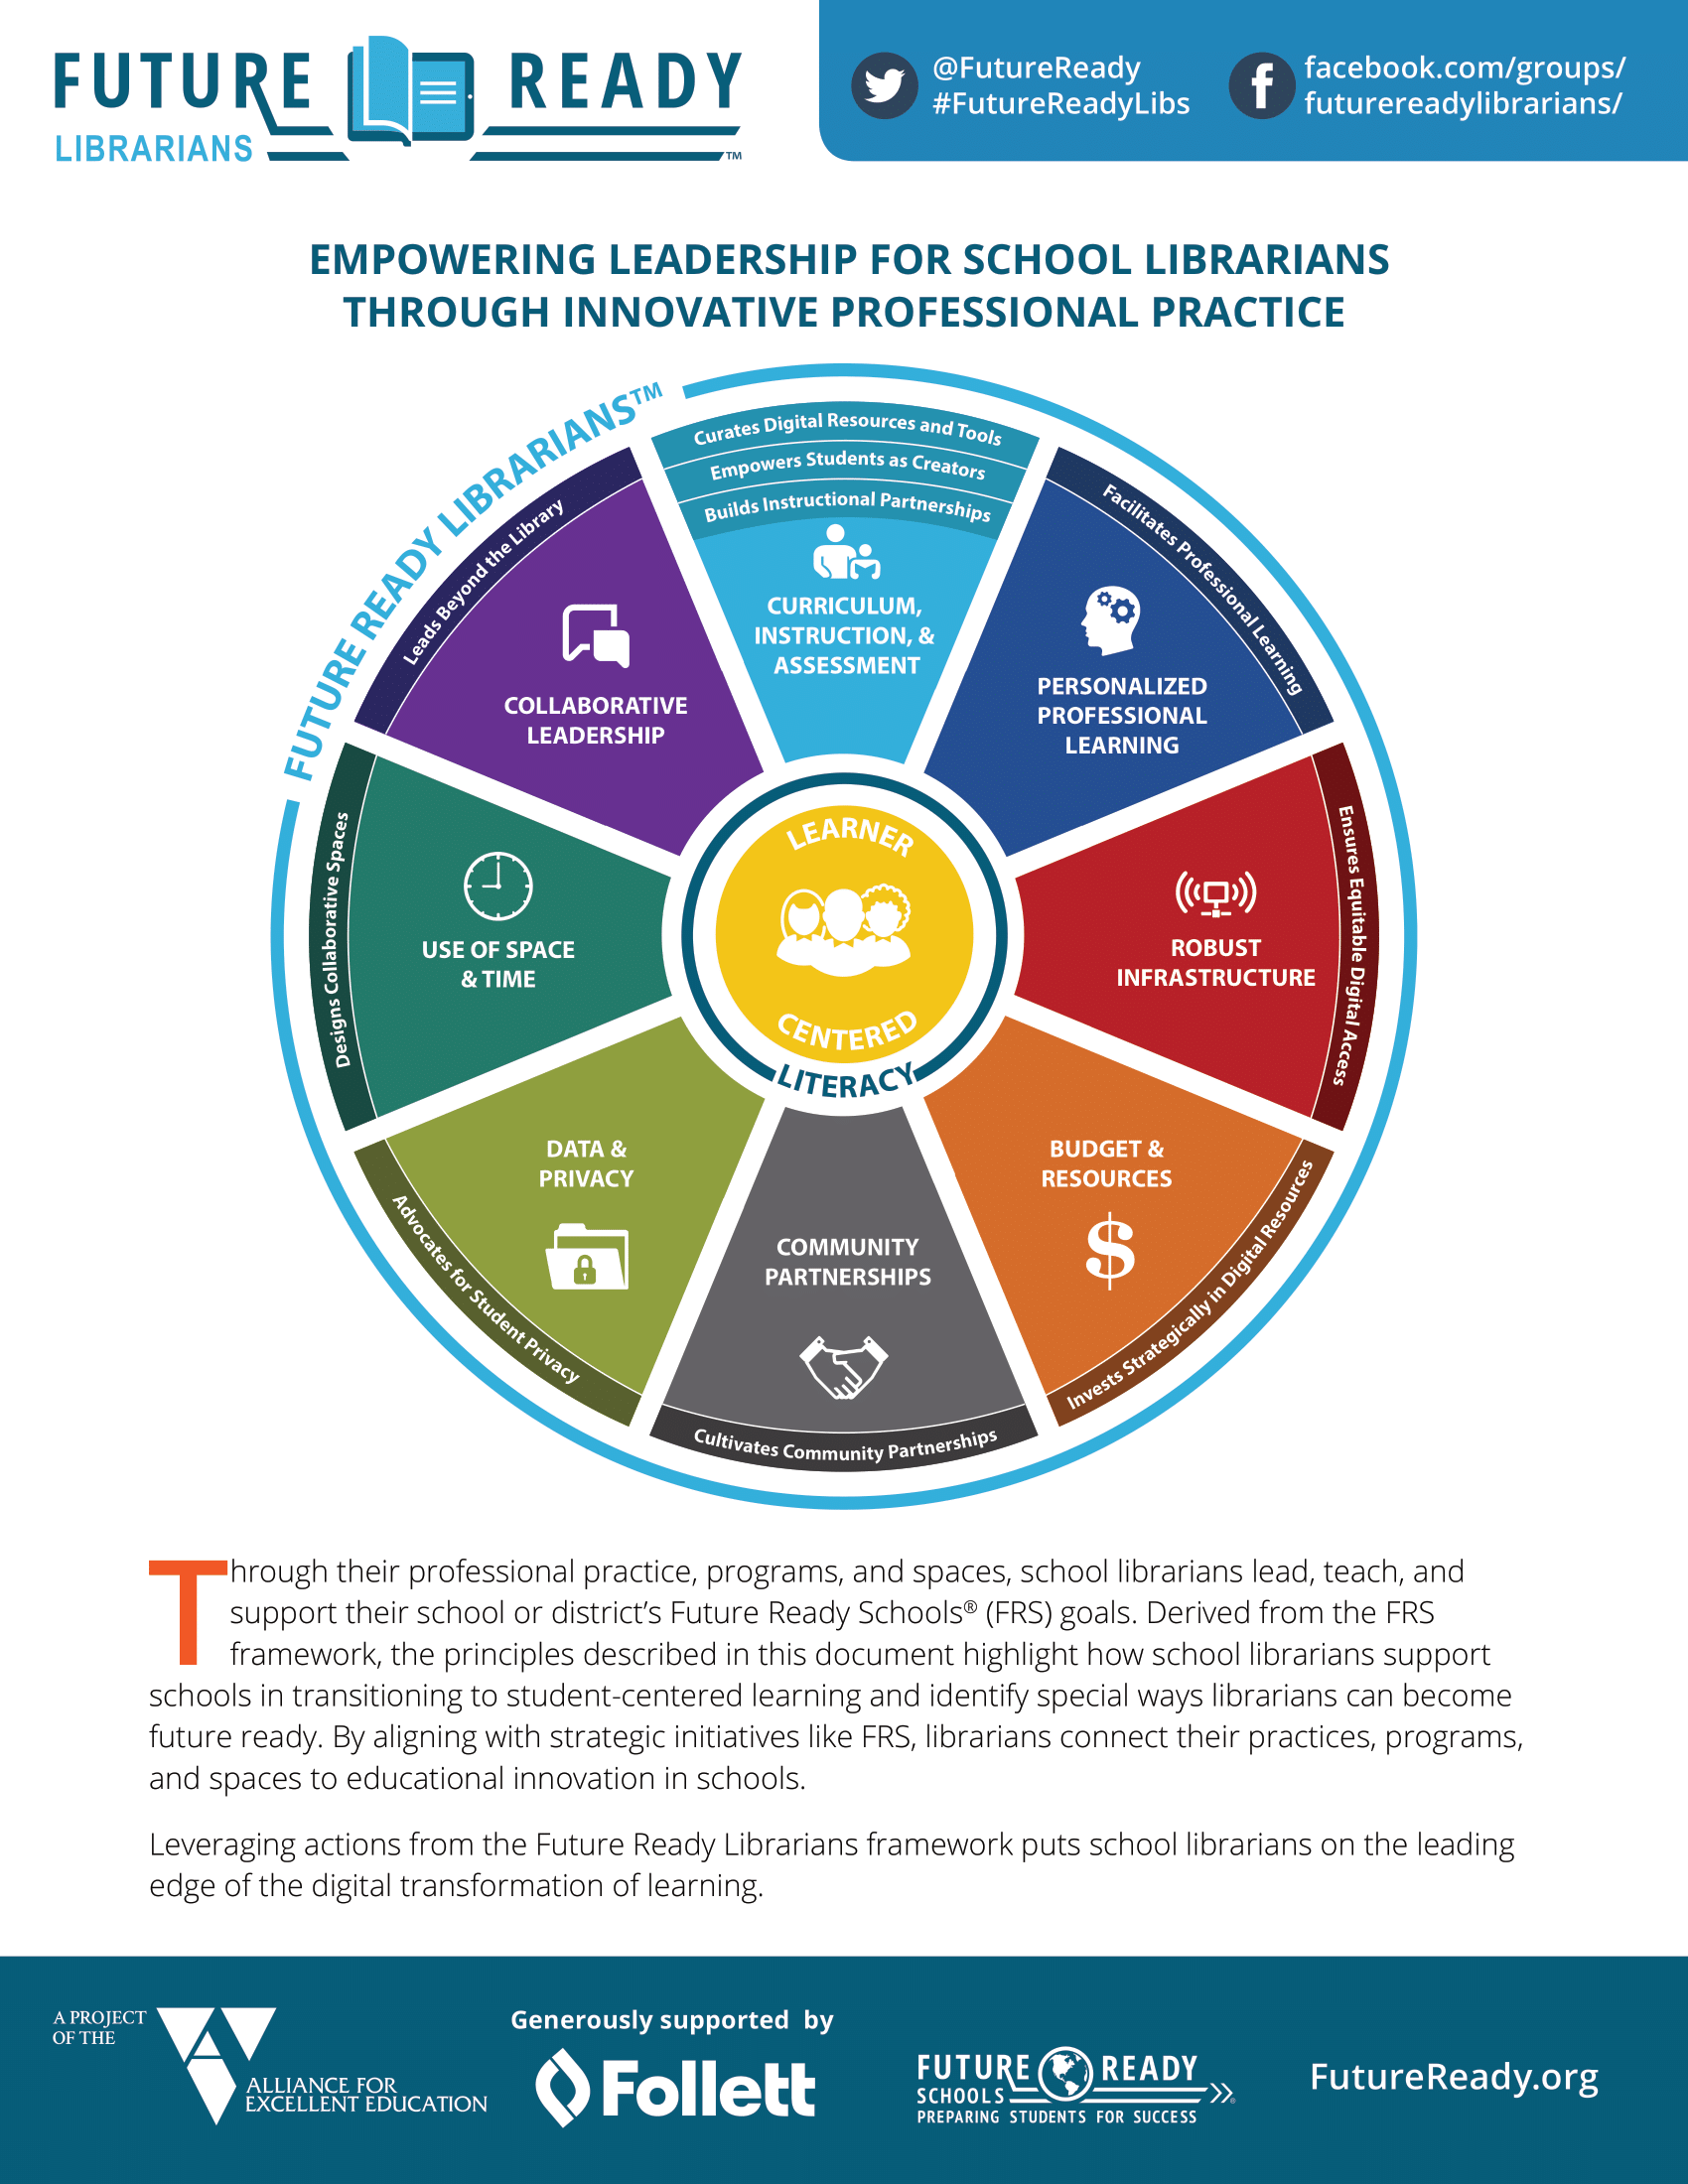 The Future Ready Librarians Framework